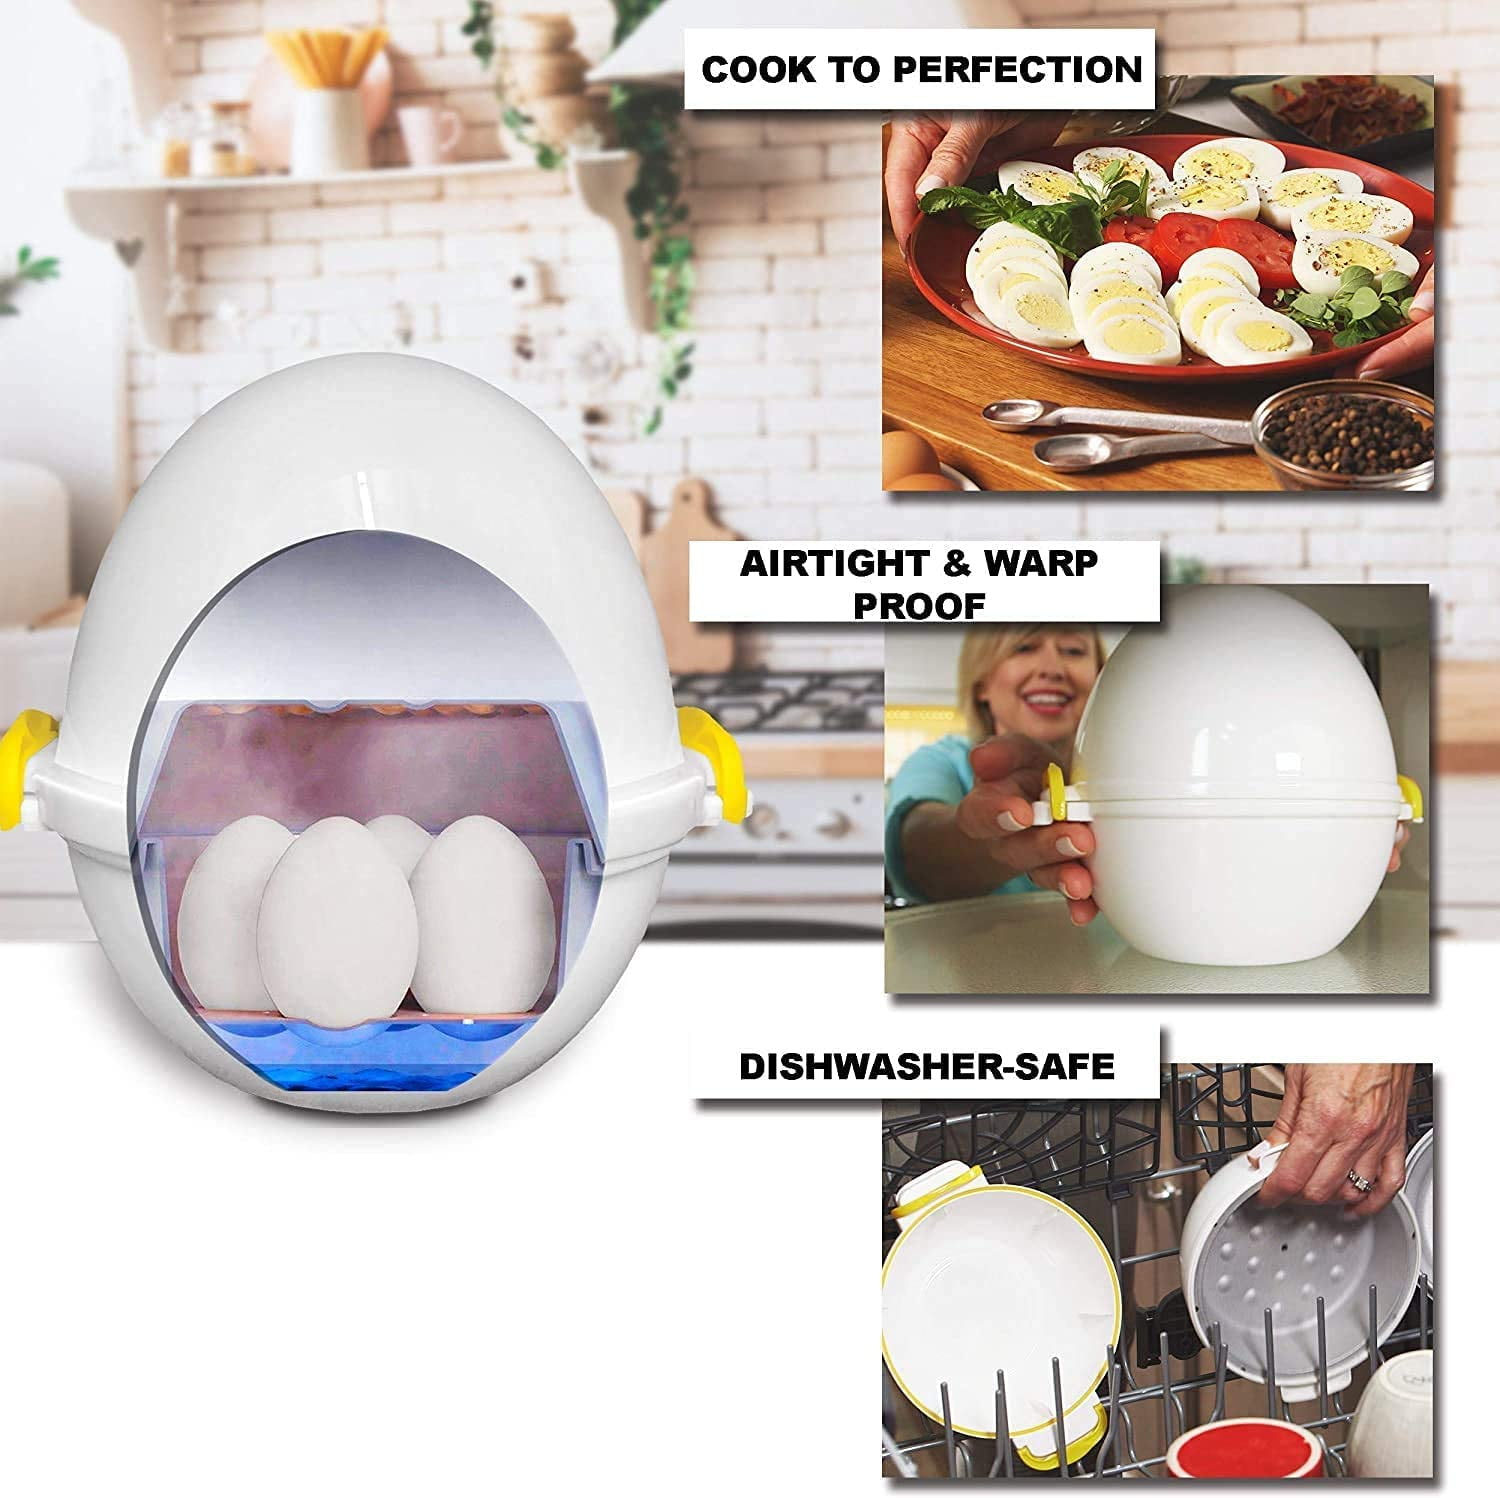  Eggpod by Emson Egg Cooker Wireless Microwave Hardboiled Egg  Maker, Cooker, Egg Boiler & Steamer, 4 Perfectly-Cooked Hard boiled Eggs in  Under 9 minutes As Seen On TV : Home 